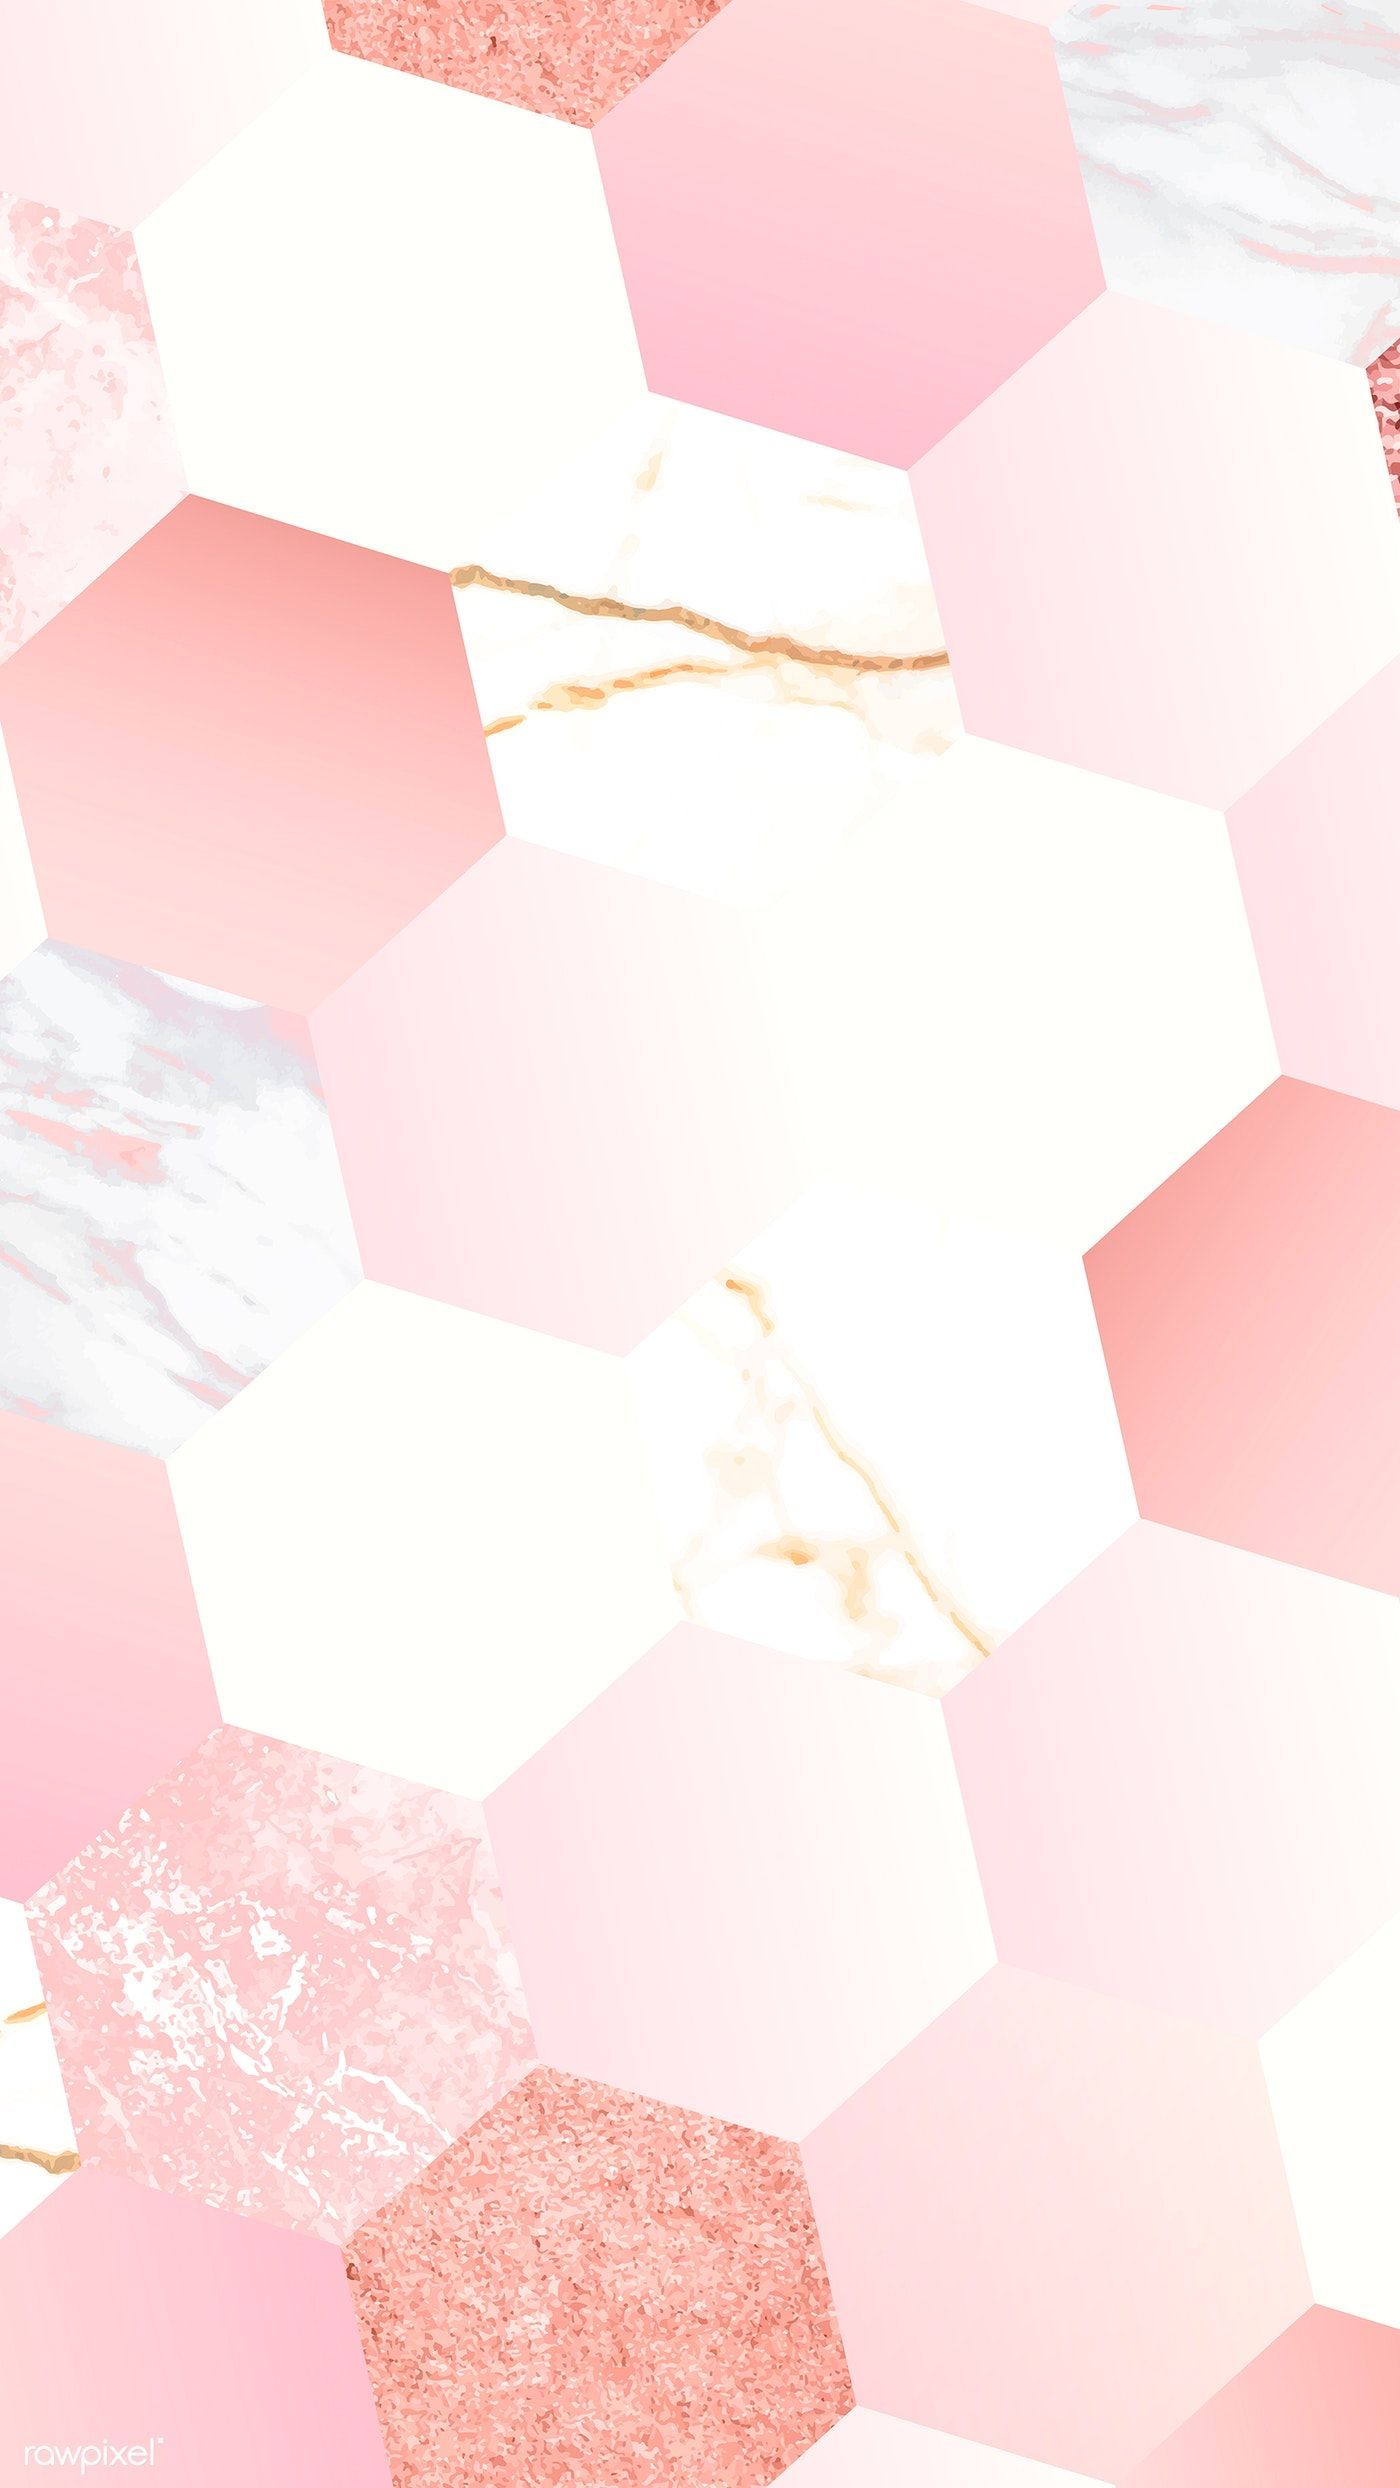 Pink feminine hexagon geometric background vector. free image by rawpixel.com / Niwat. Geometric background, Pink wallpaper background, Paper background texture